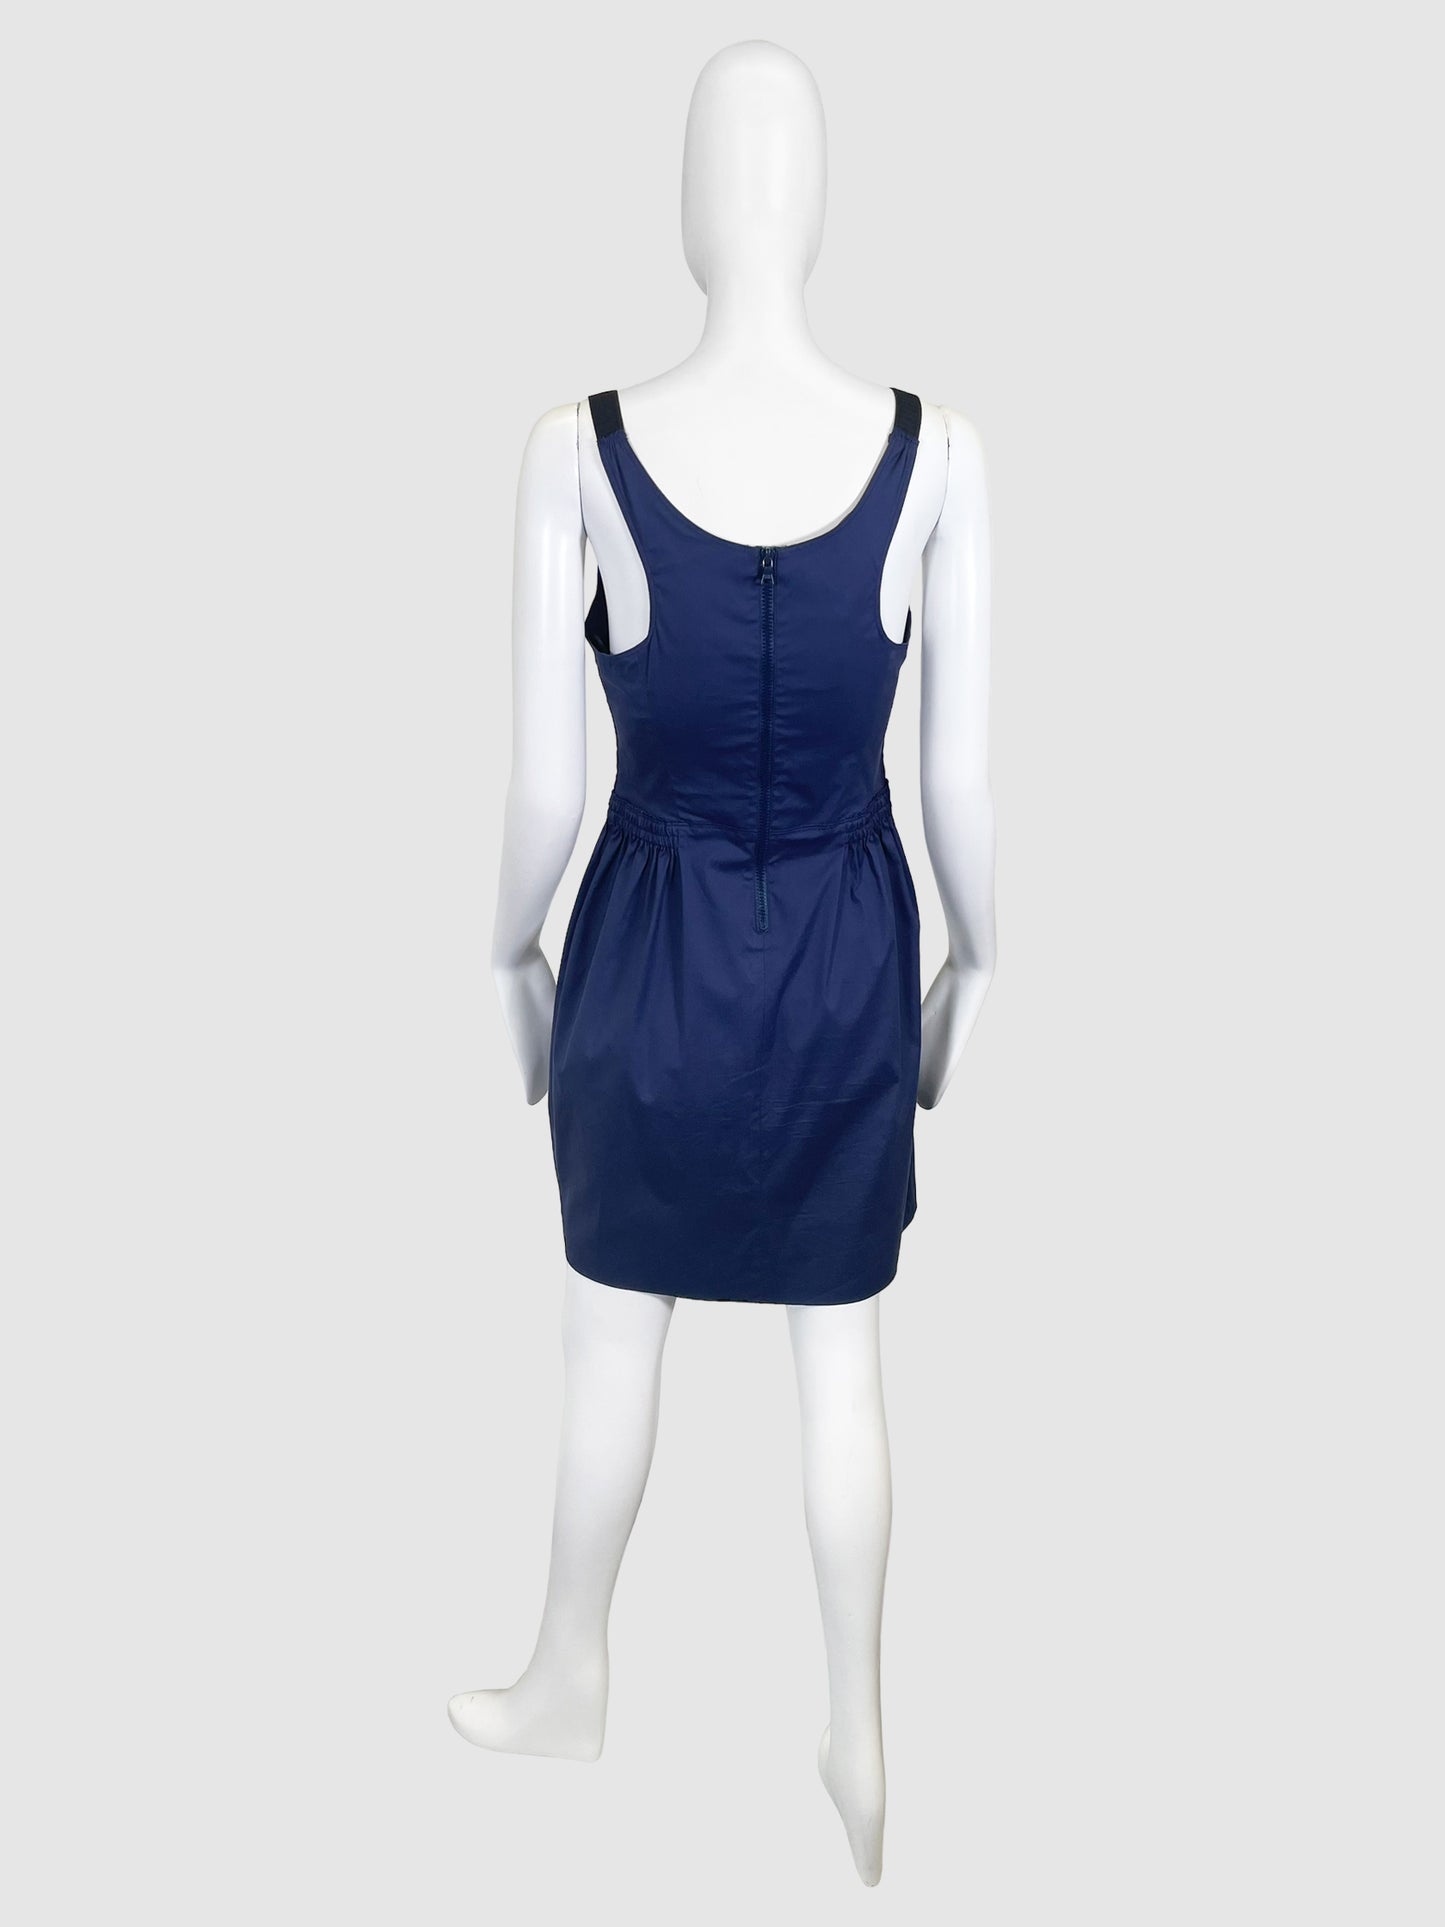 Prada Sport A-Line Mini Dress - Size 42